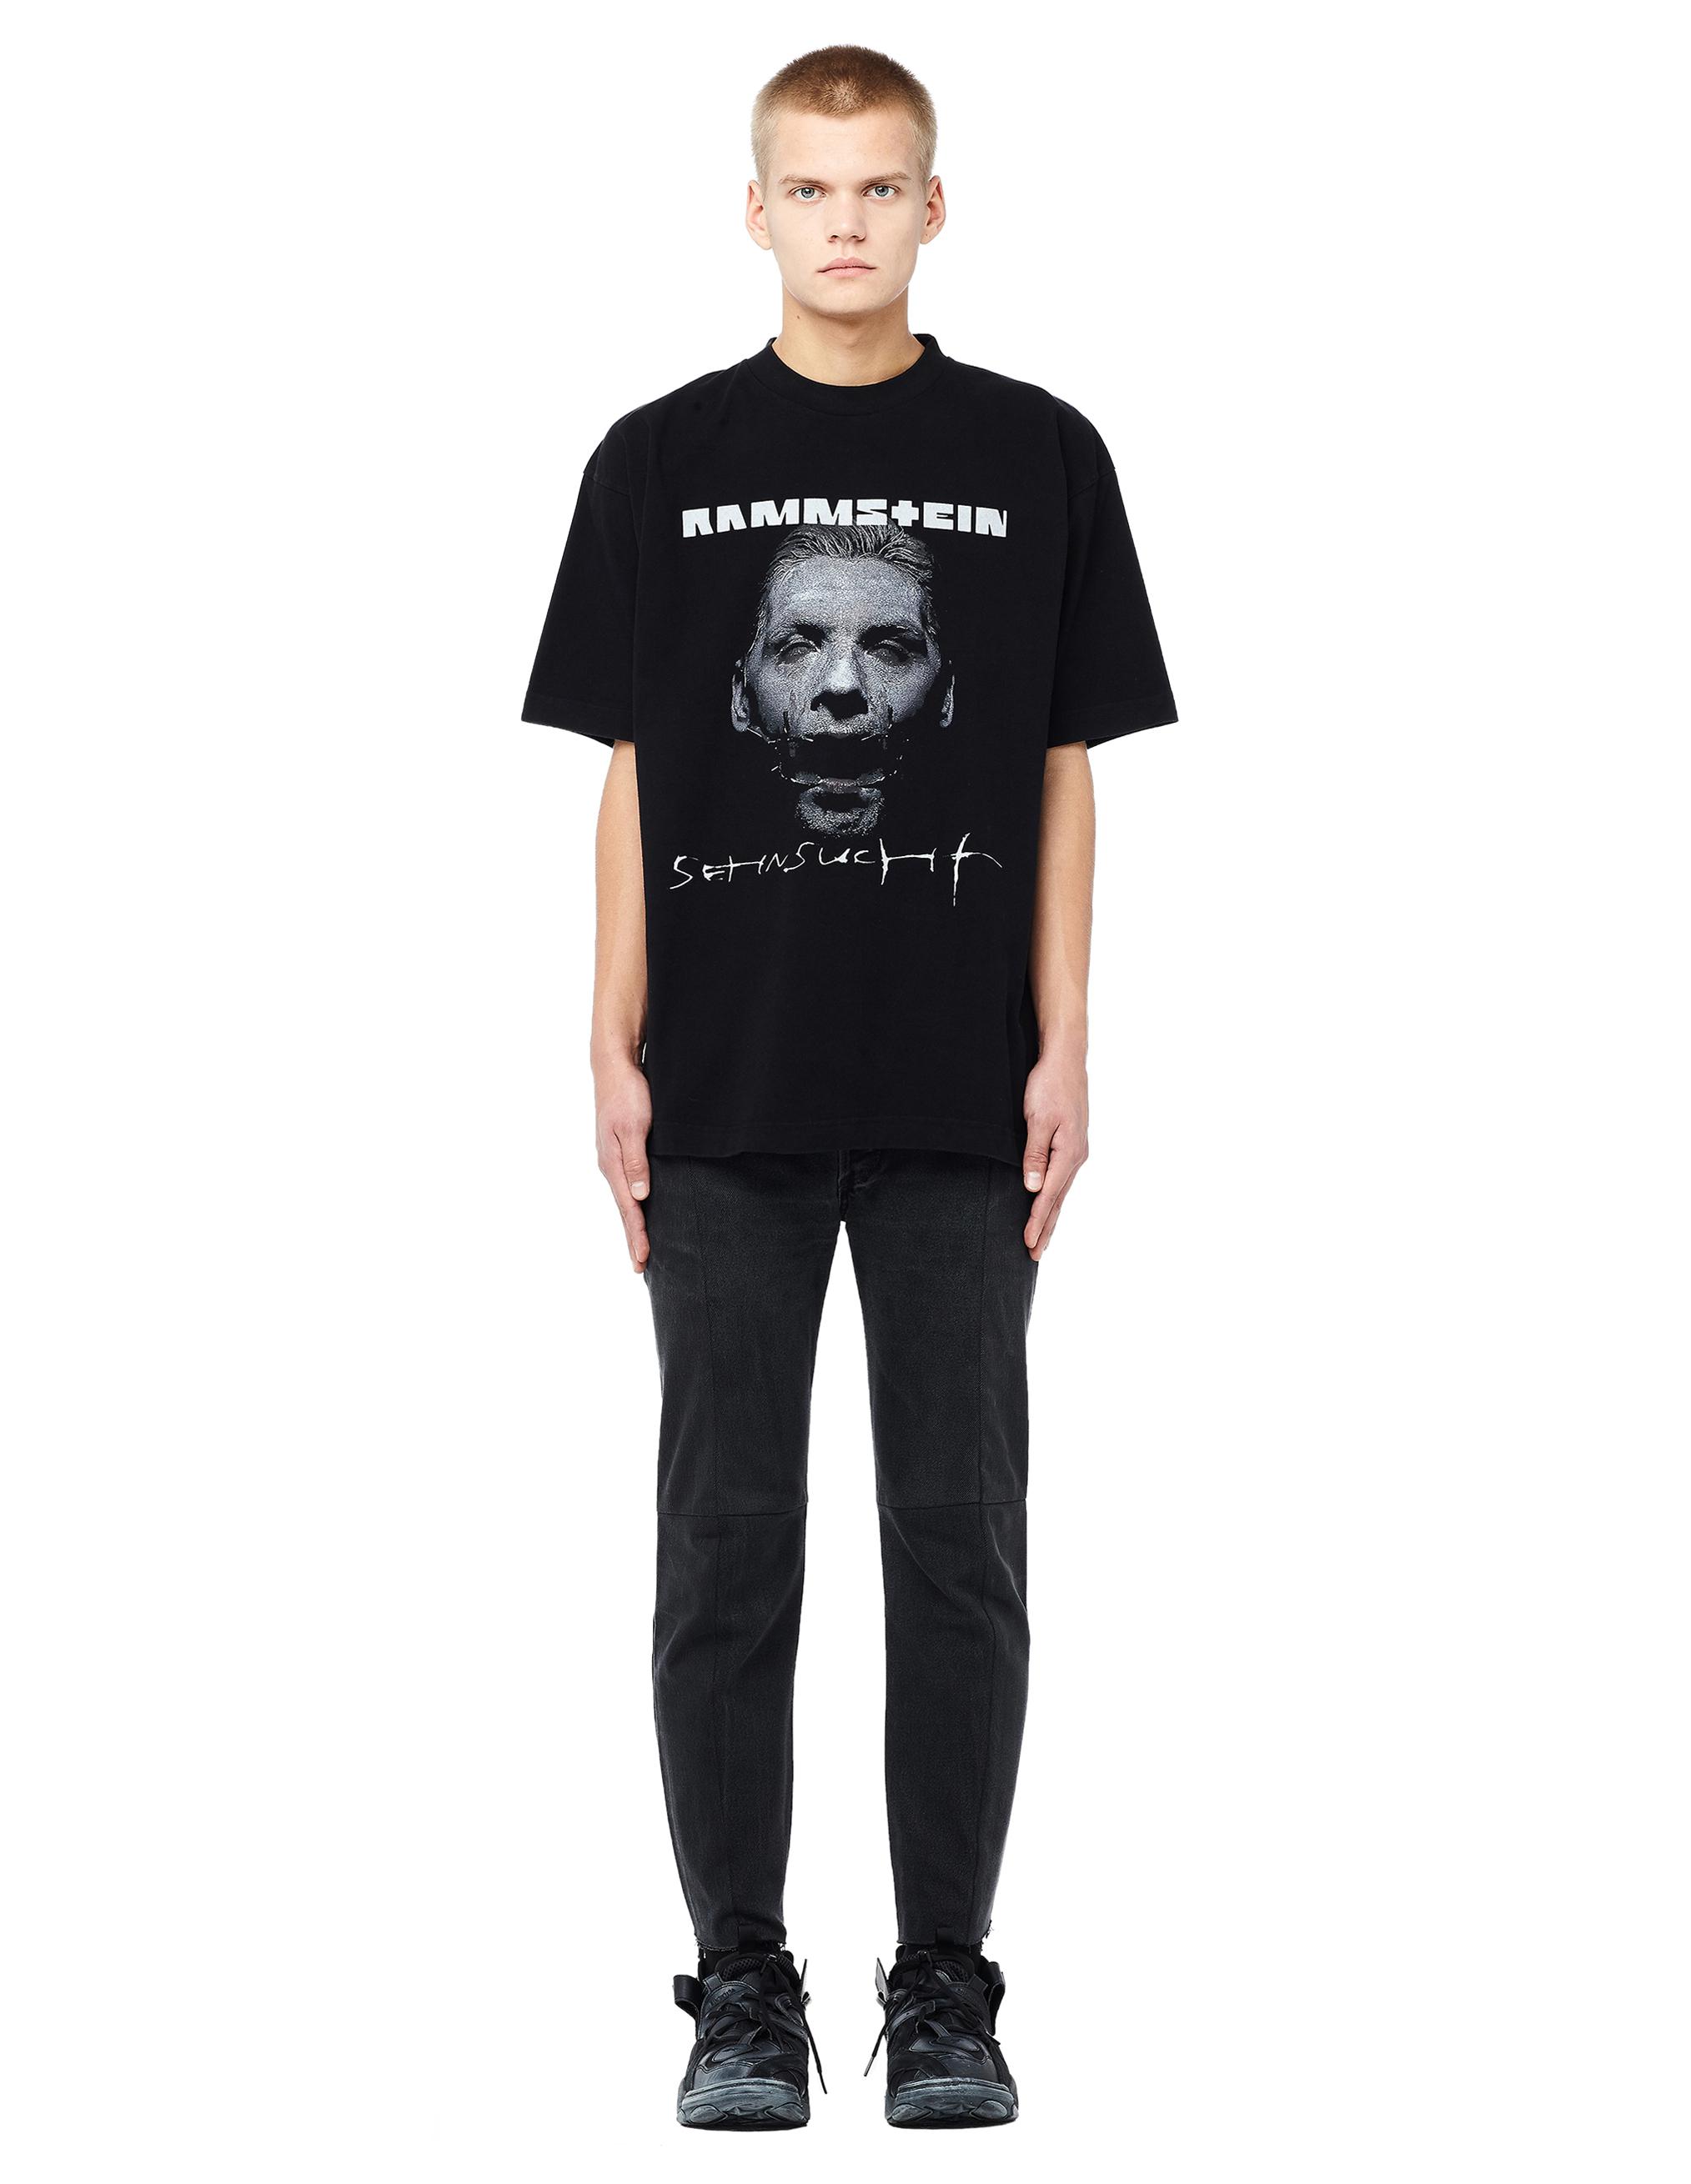 Lyst - Vetements Rammstein Printed Cotton T-shirt in Black for Men